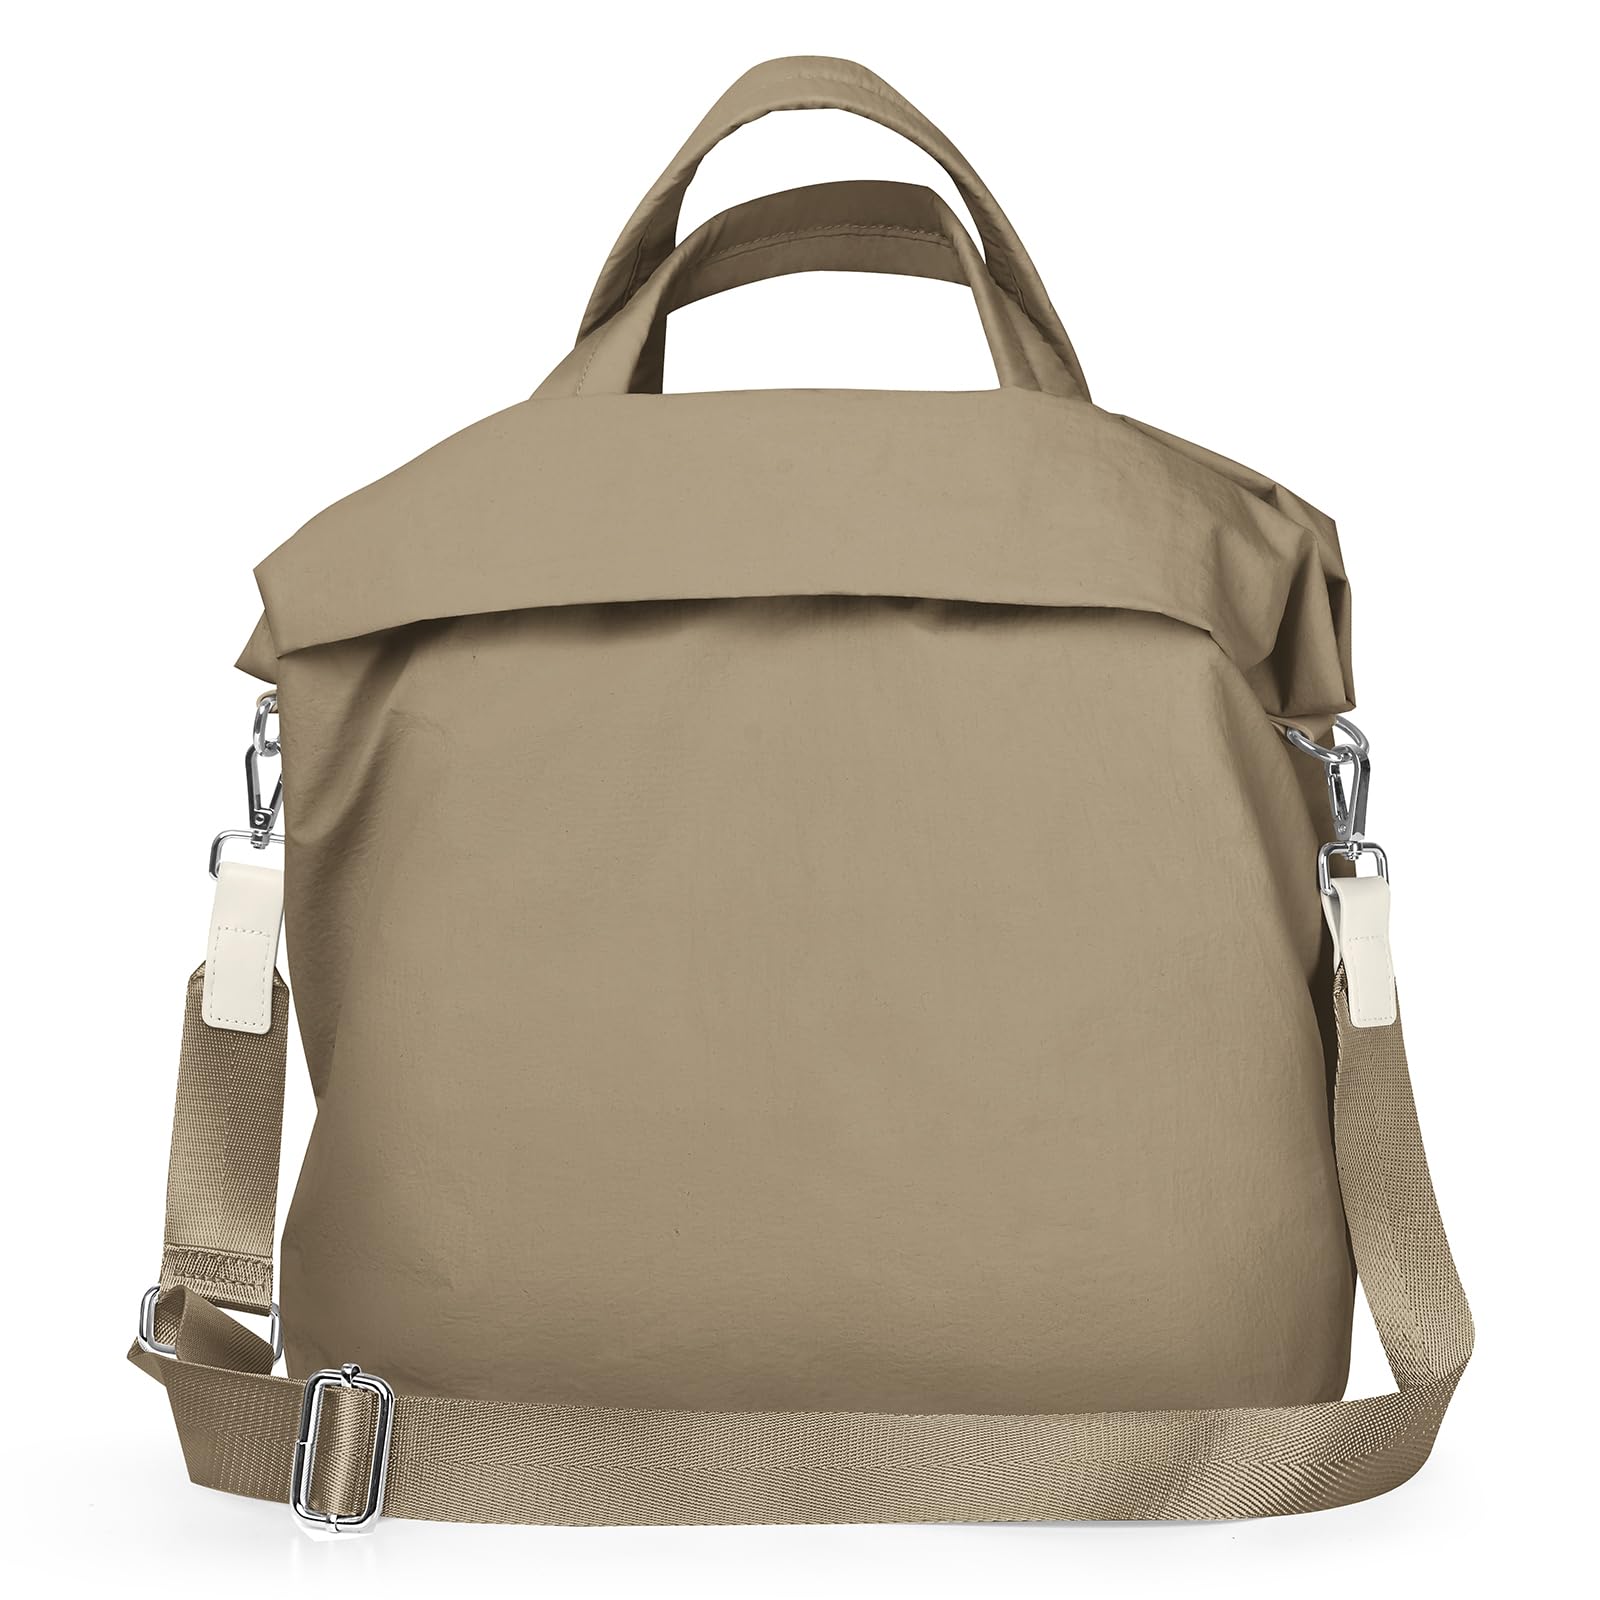 ilyswee Crossbody Tote Bag for Women, on My Level Bag, Removable Strap Multi Pockets Nylon Hobo Bag for Gym Work Travel